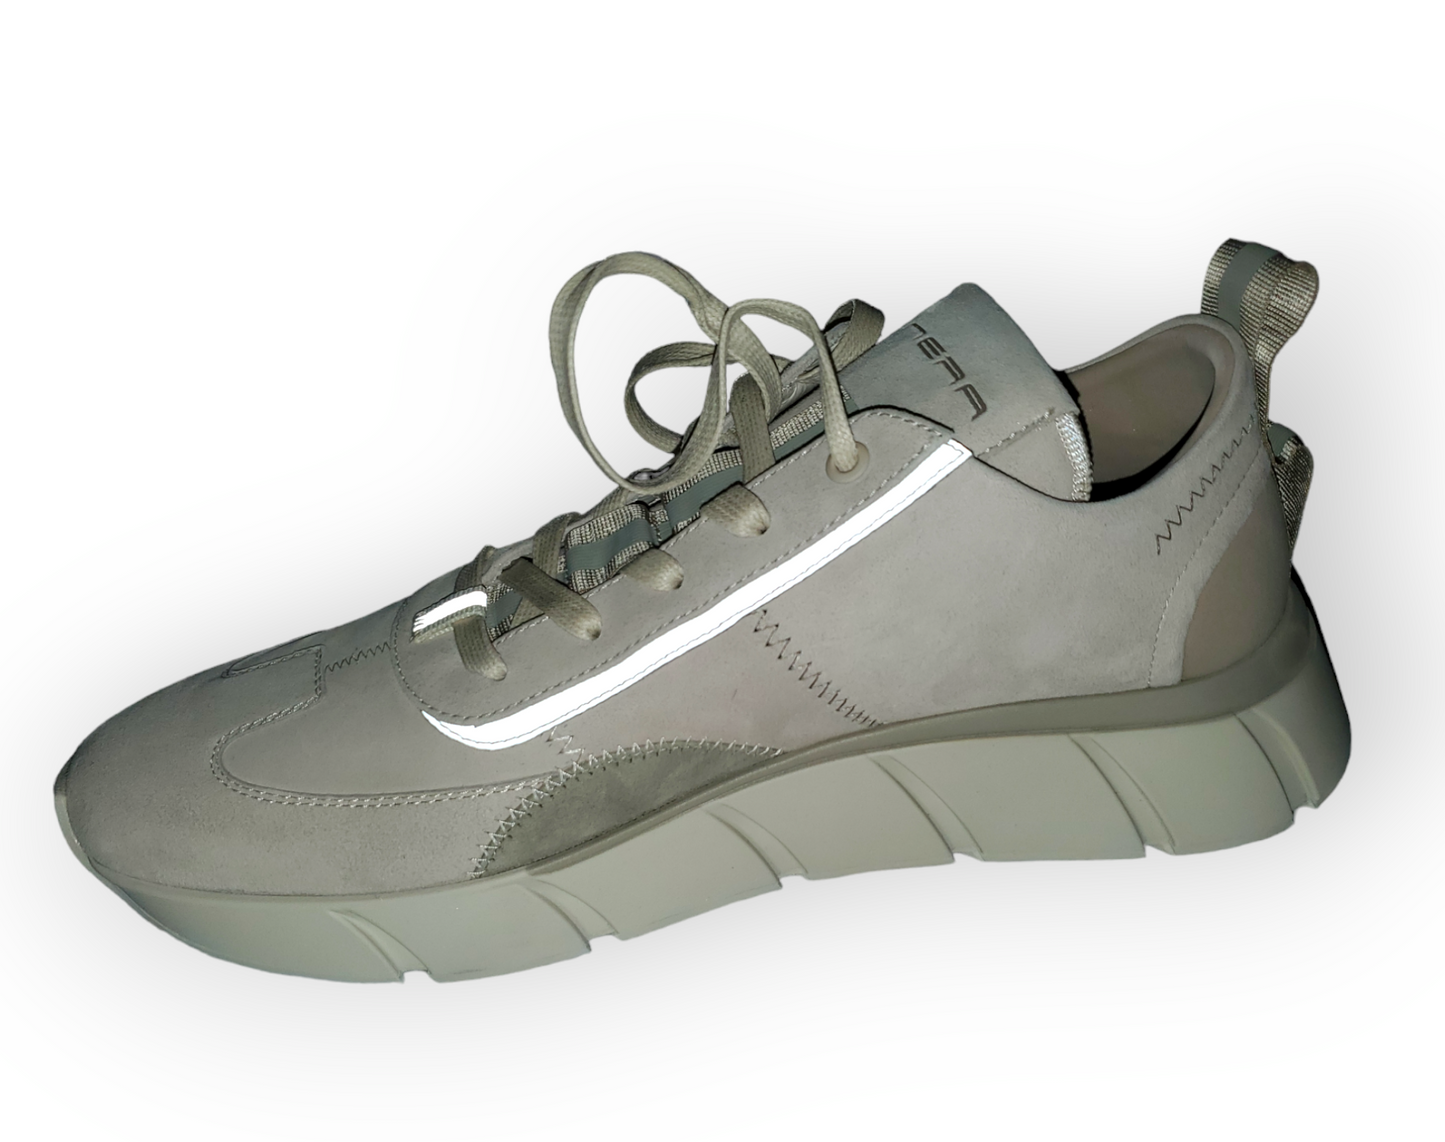 Nera Model One Suede Beige Sneakers|New